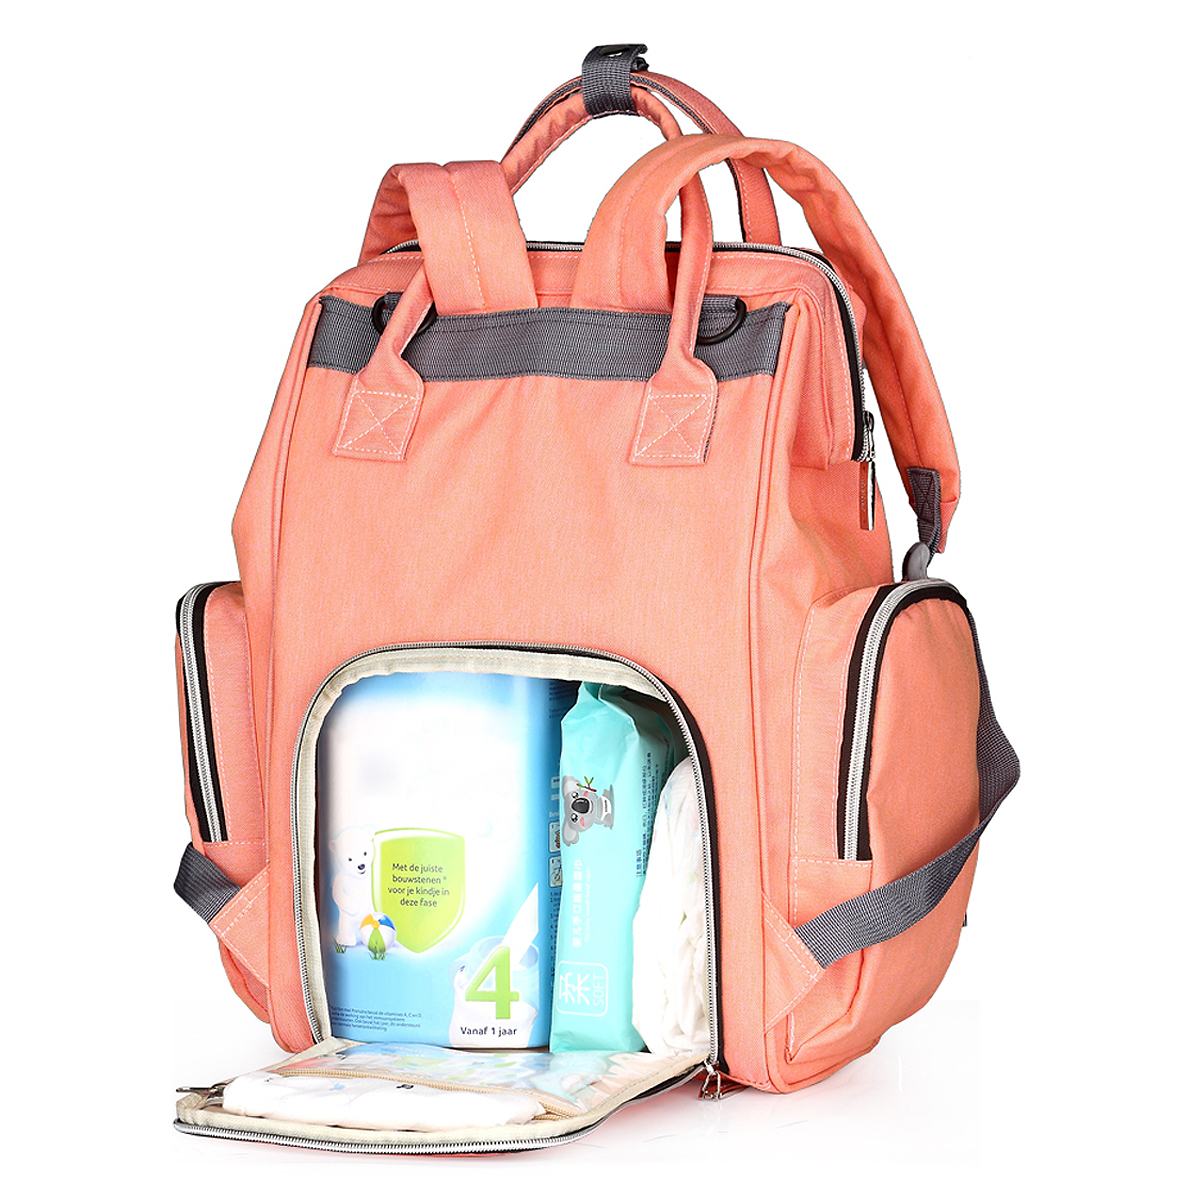 Oxford-Cloth-Waterproof-Travel-Backpack-Multi-function-Mommy-Bag-Baby-Diaper-Storage-Bag-Backpack-1632162-7